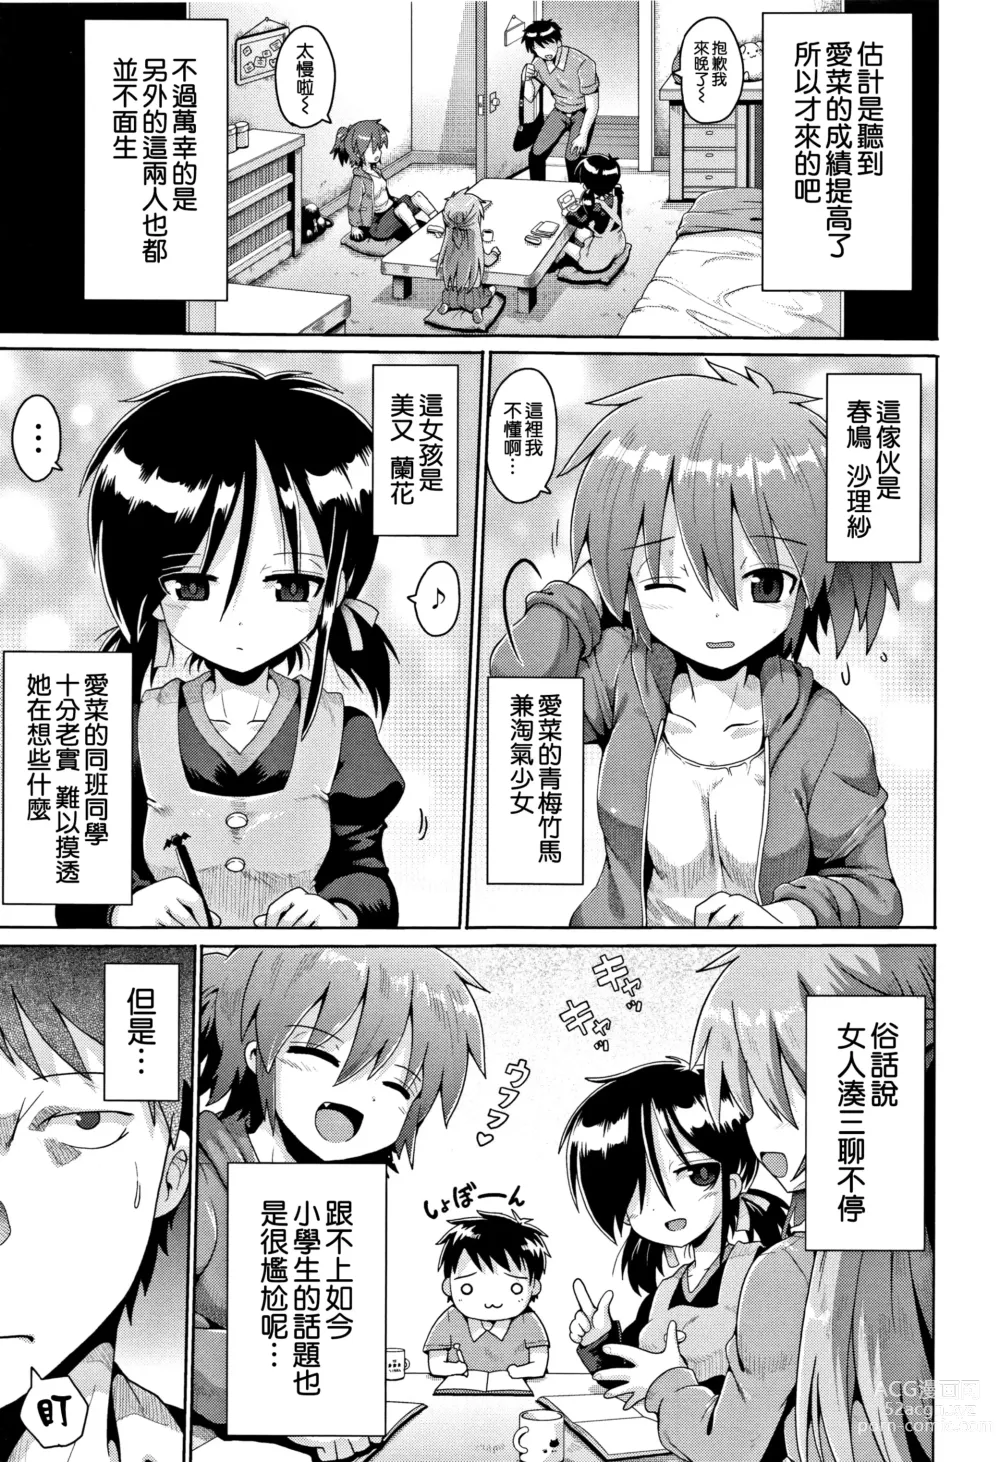 Page 4 of manga Trident 1 + 2 + 3